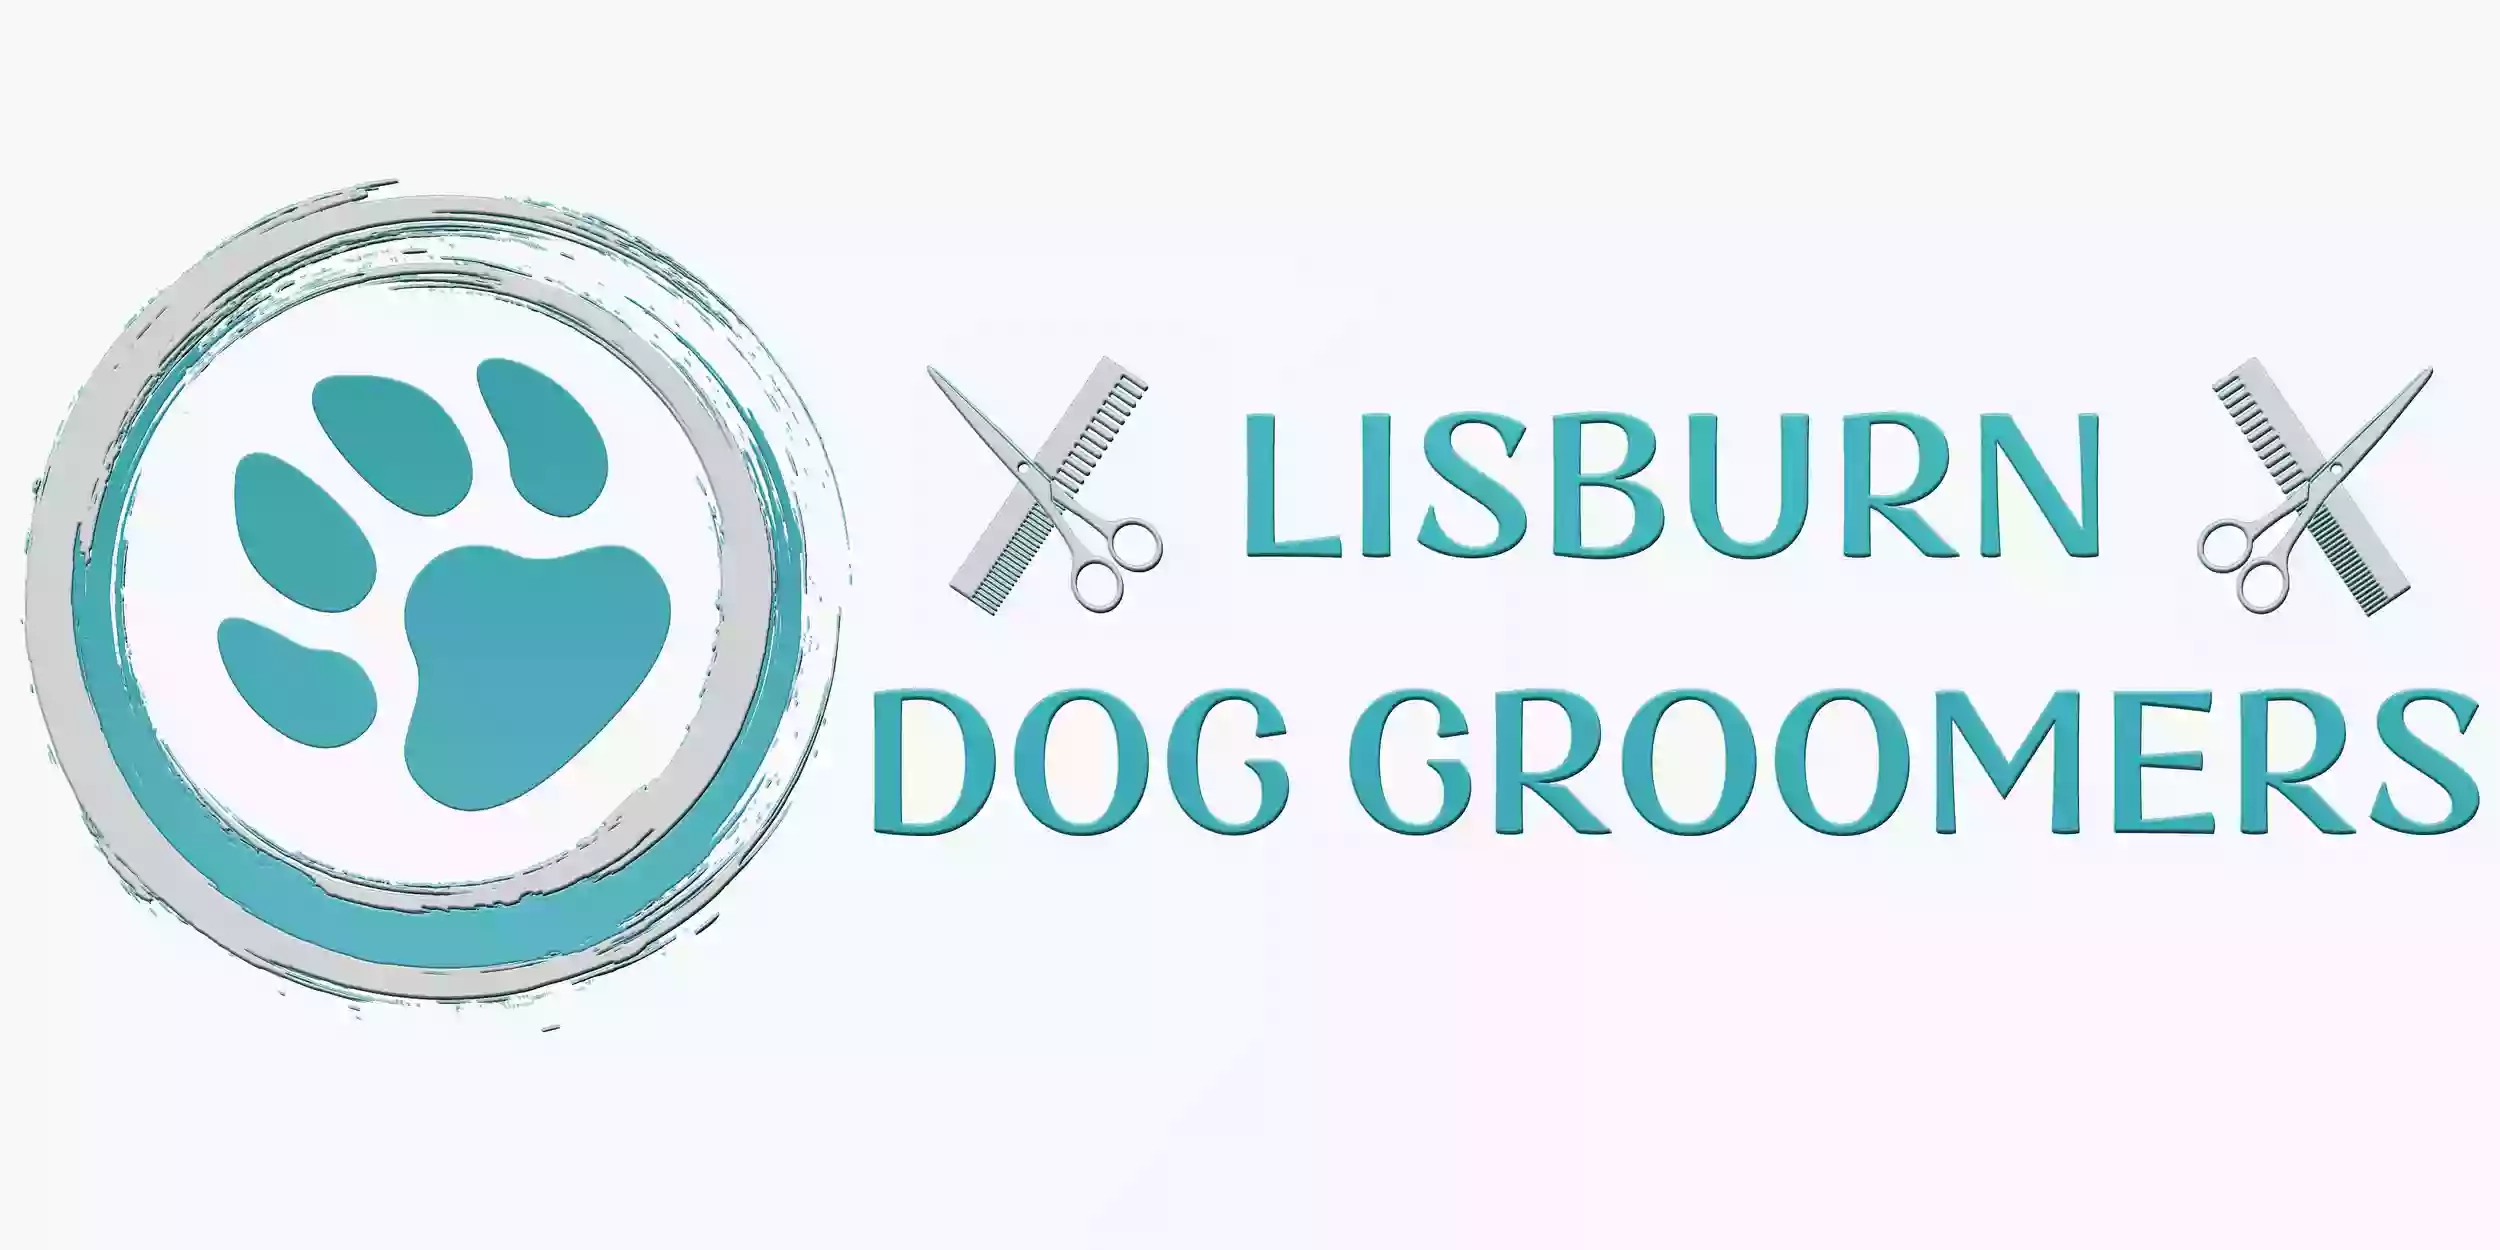 Lisburn Dog Groomers Ltd